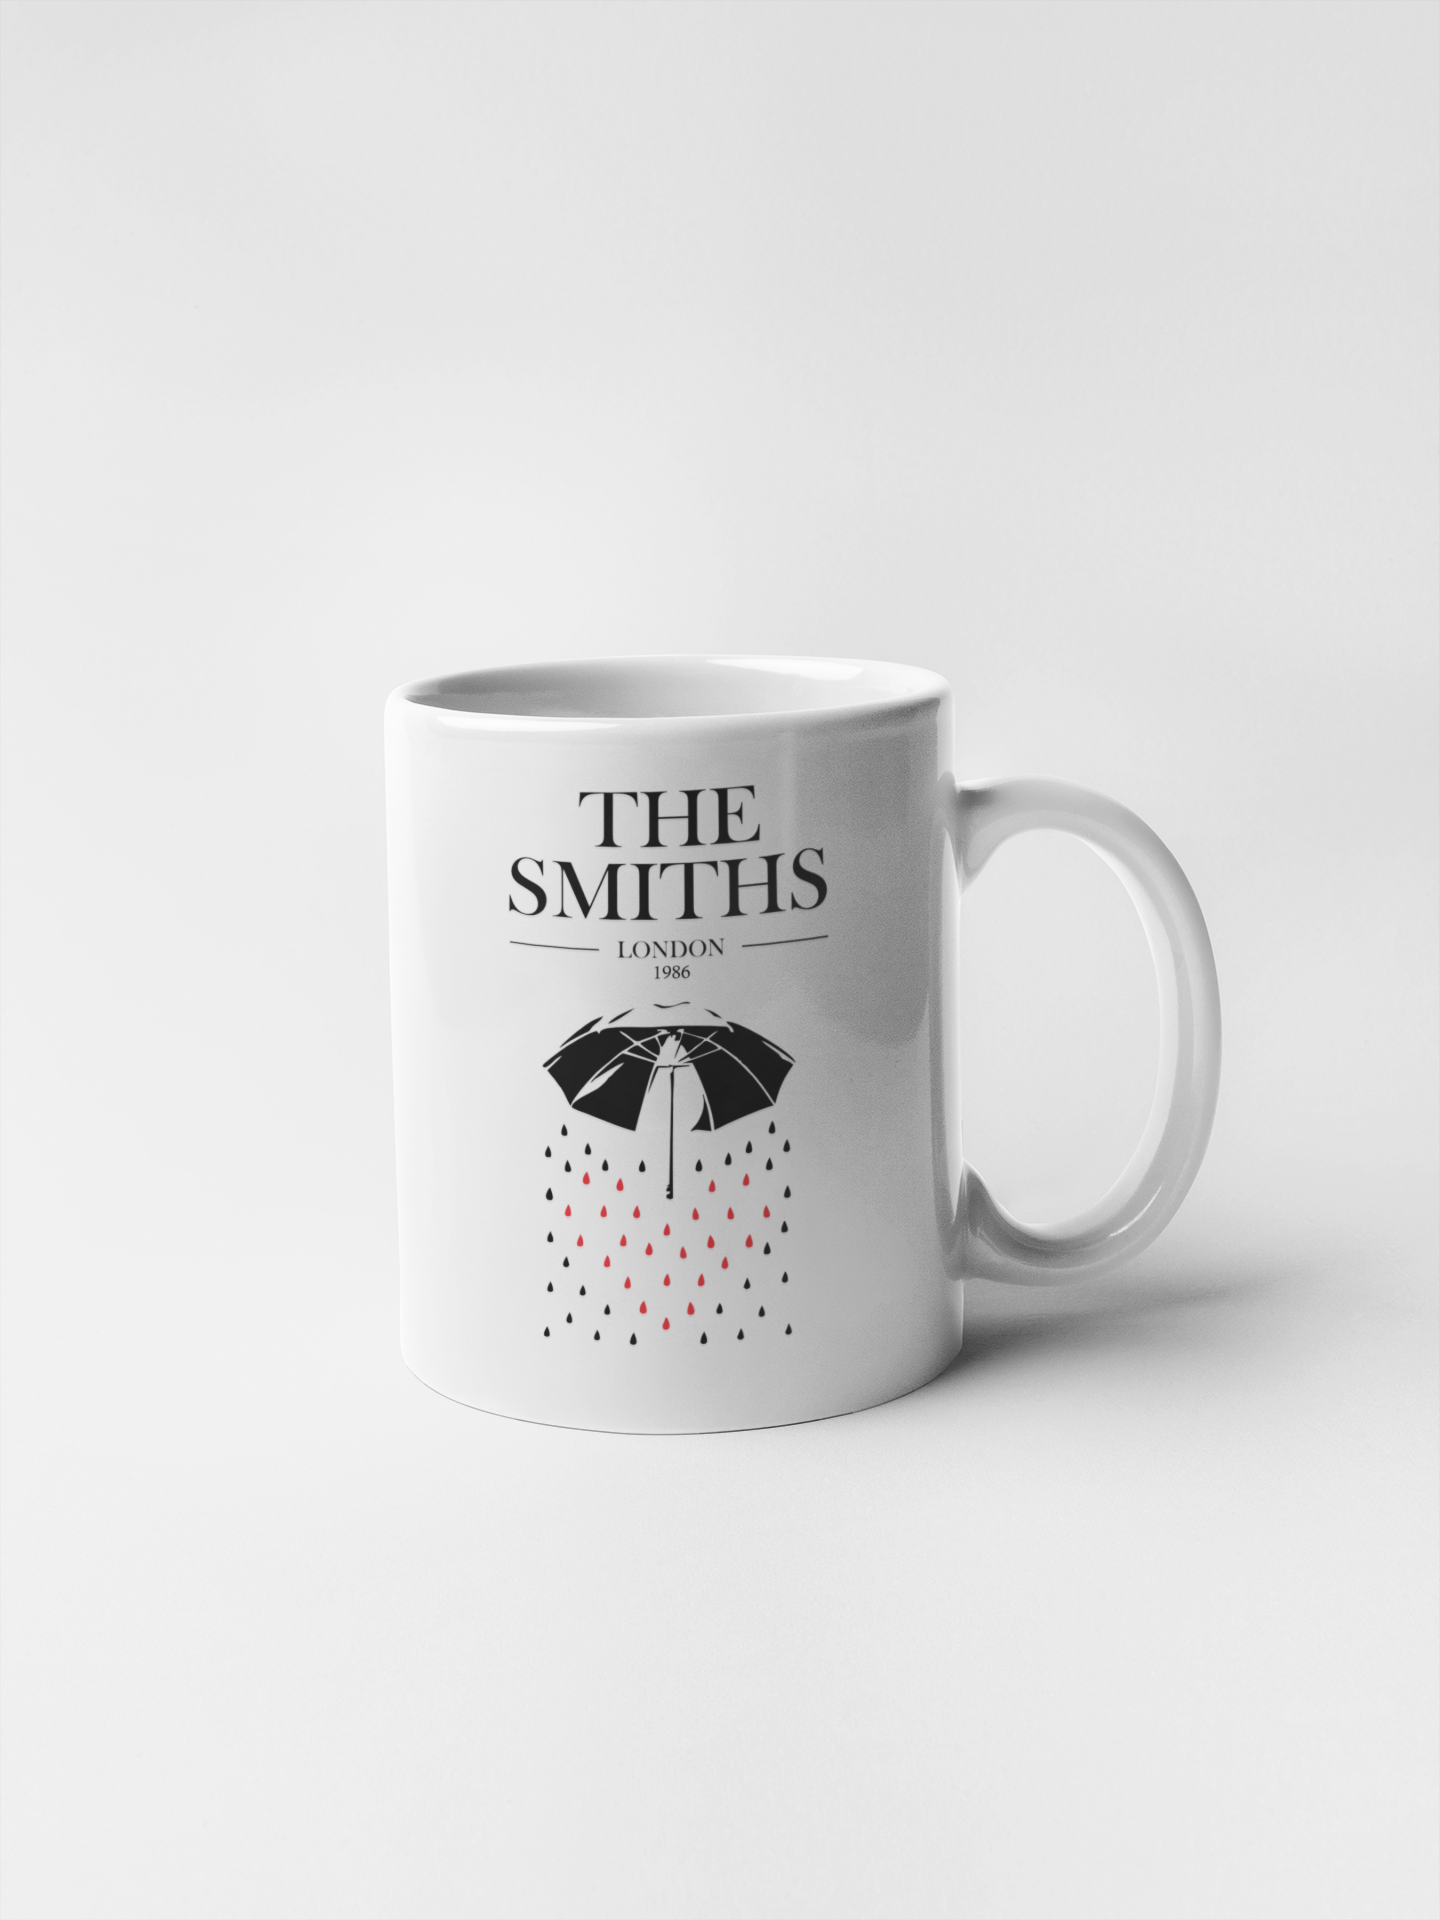 The Smiths London 1986 Ceramic Coffee Mugs